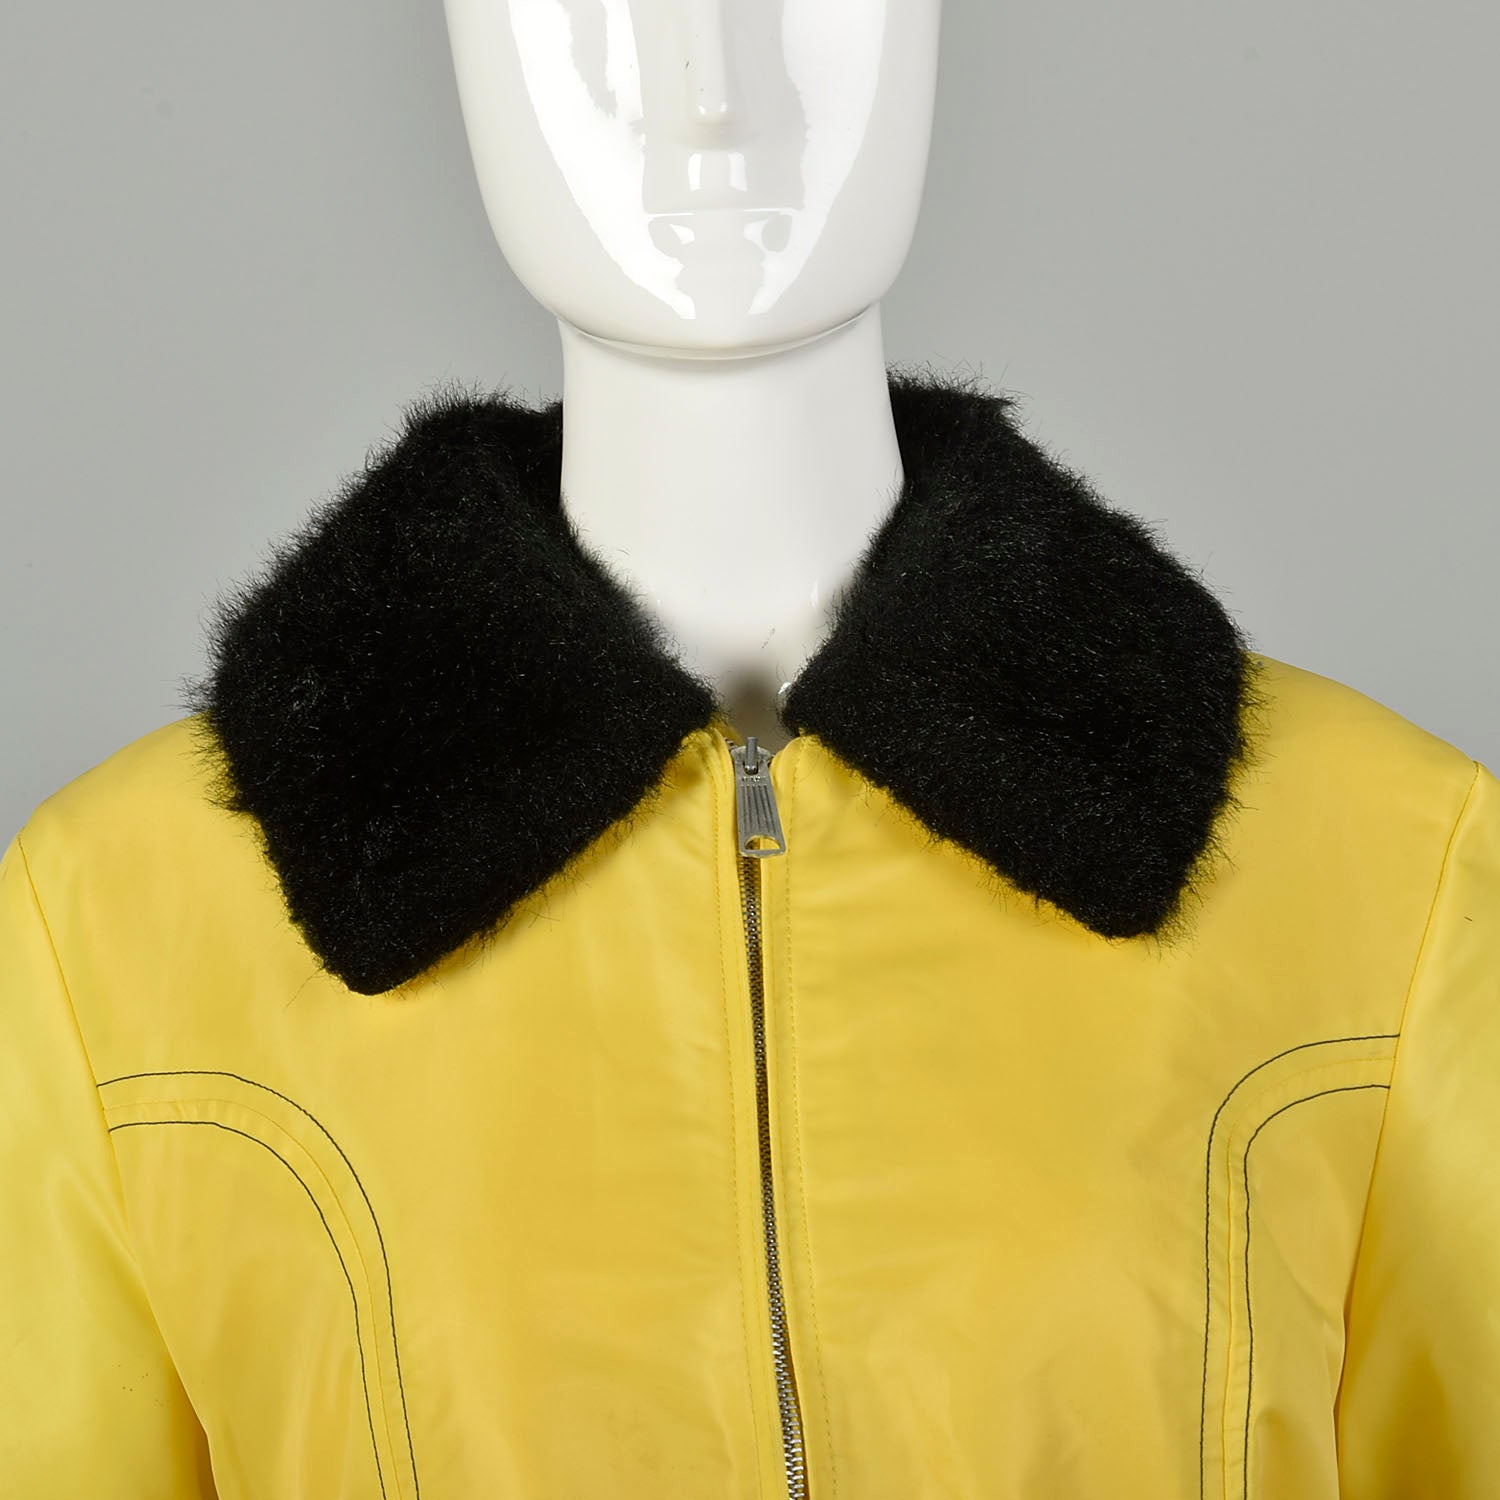 Medium 1970s Yellow Rain Coat Plush Lining Faux Fur Trim  Autumn Winter Jacket